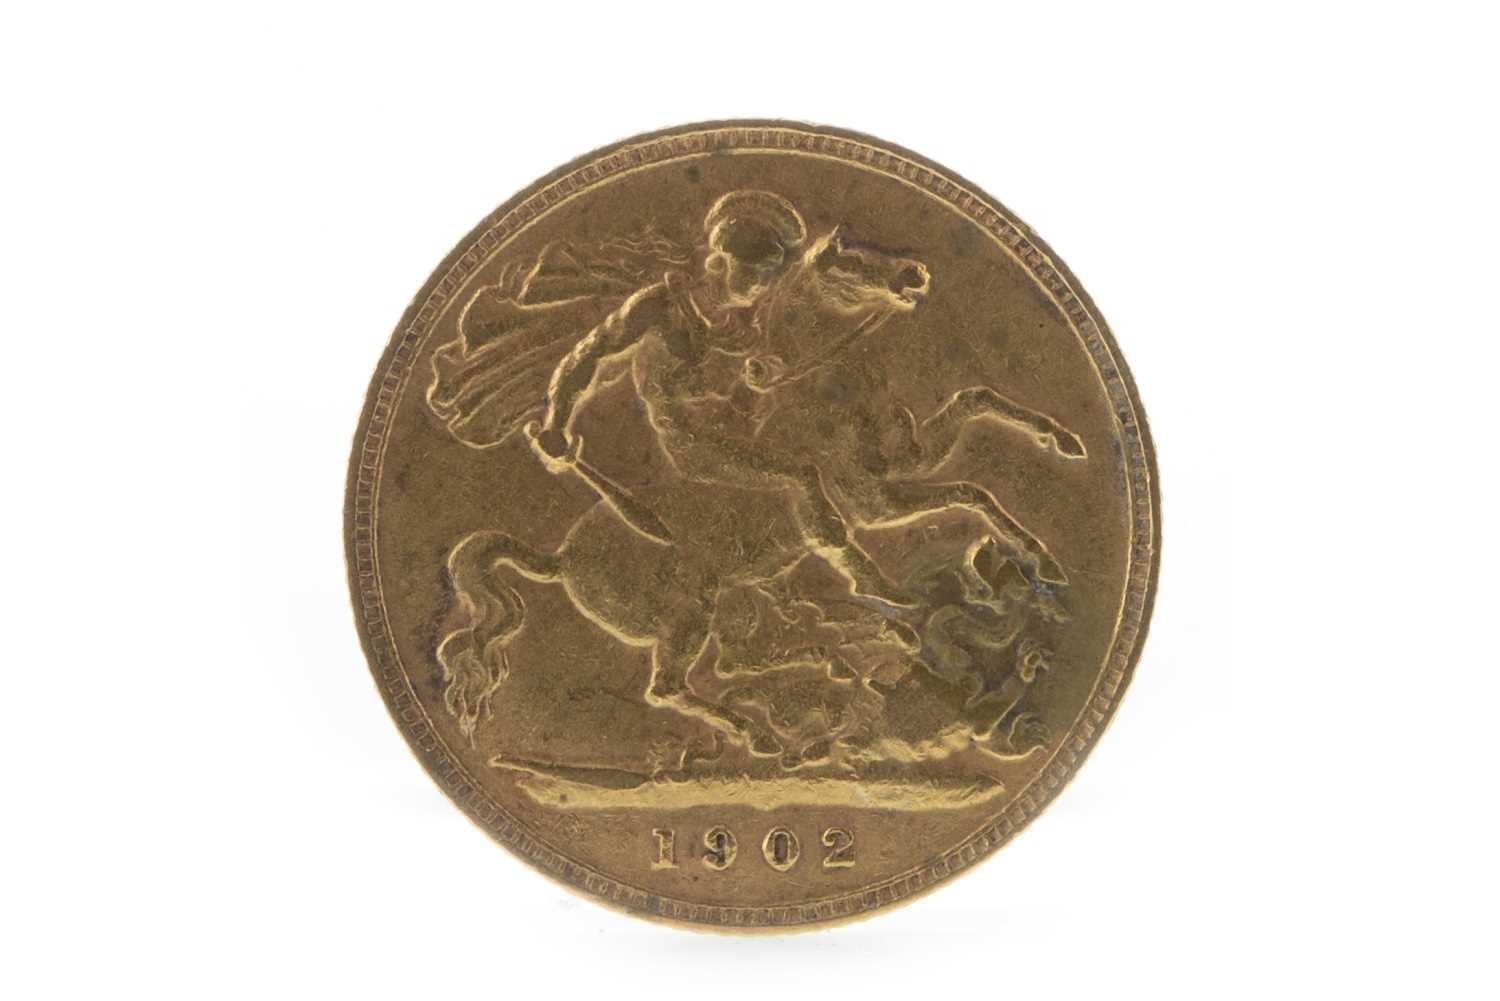 Lot 28 - A GOLD HALF SOVEREIGN, 1902